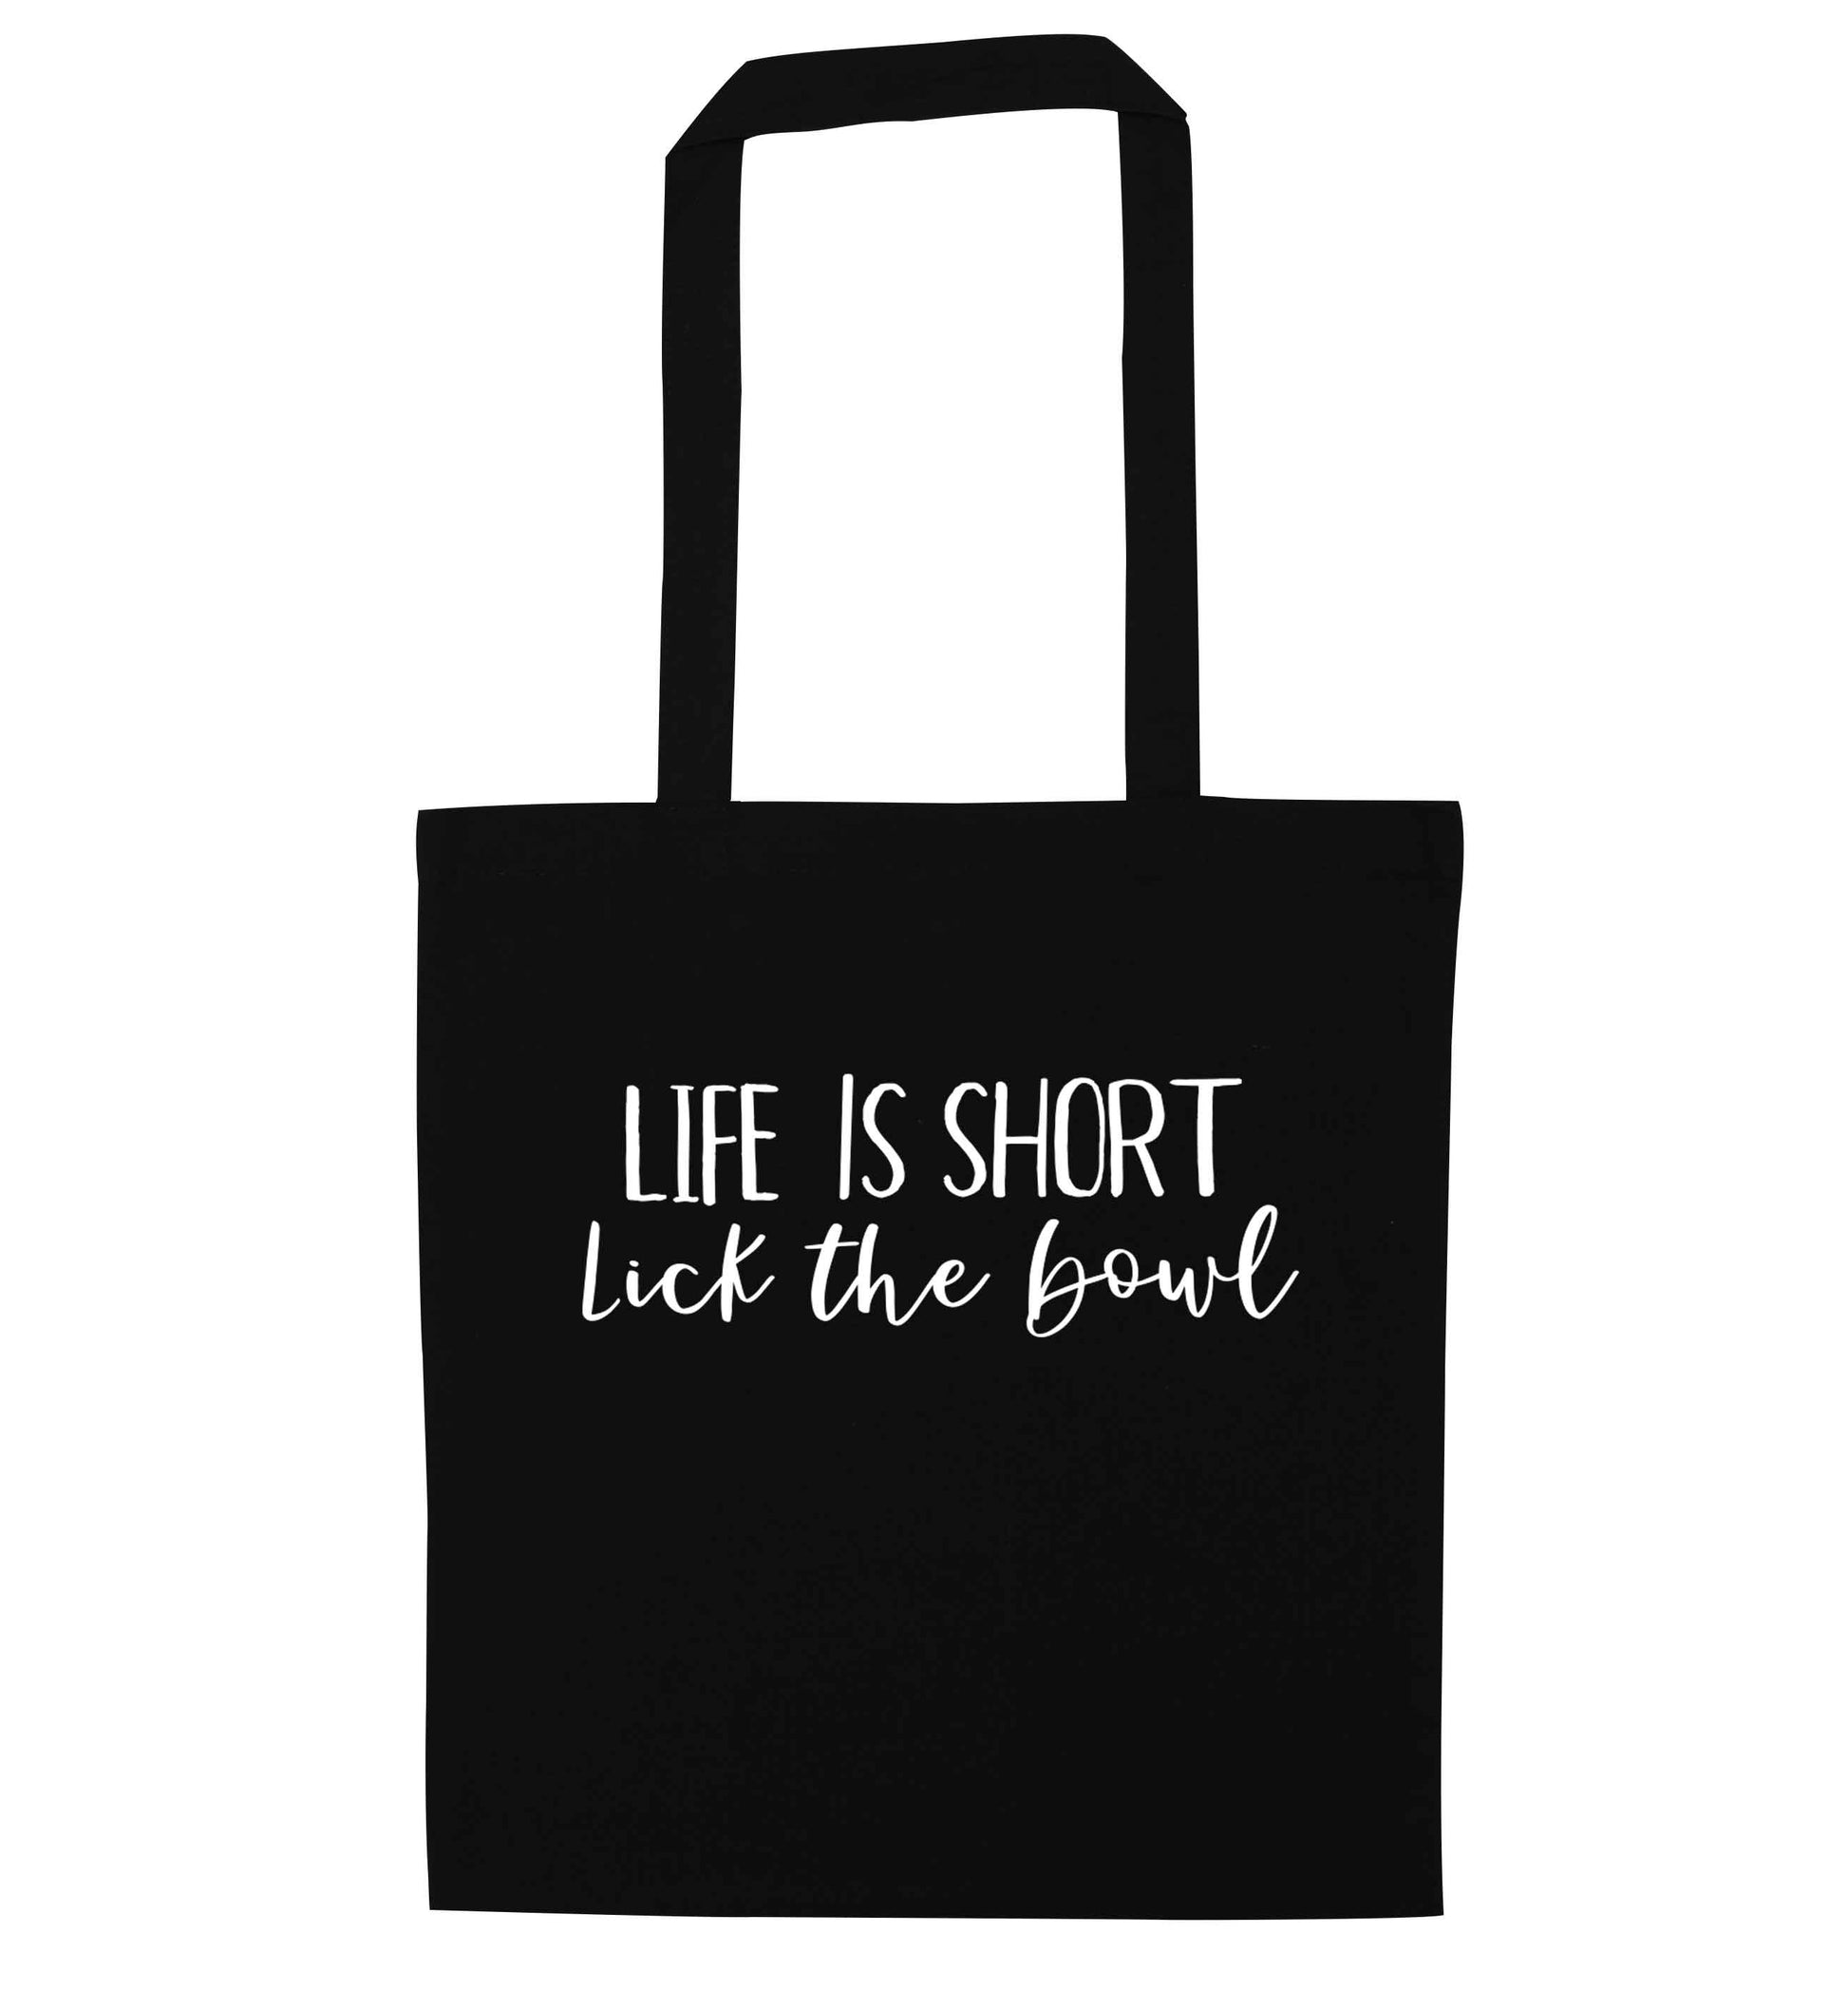 Life is short lick the bowl black tote bag